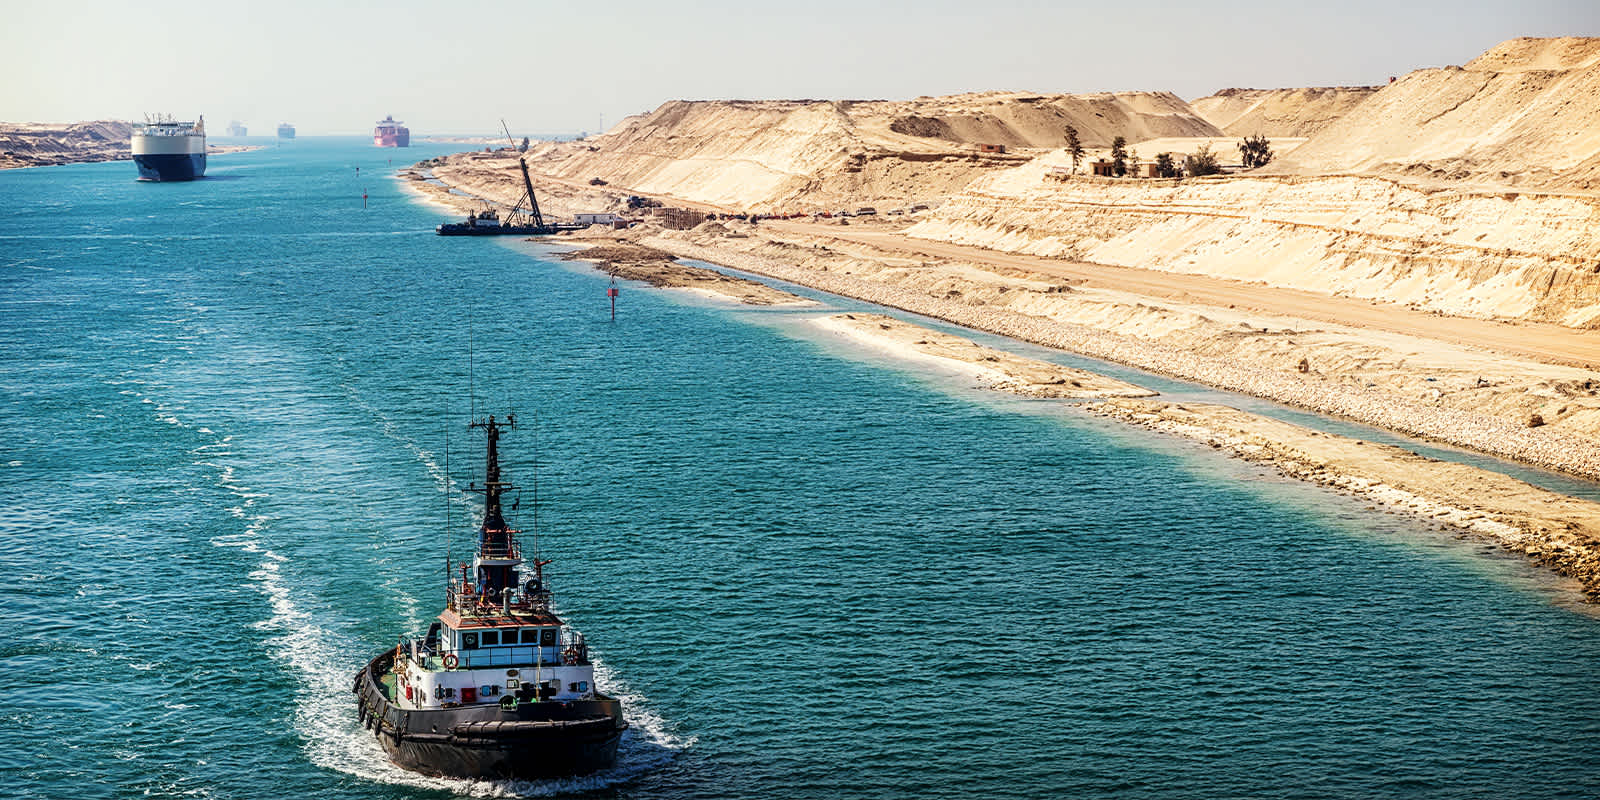 Ships Transit the Suez Again 3-30-21